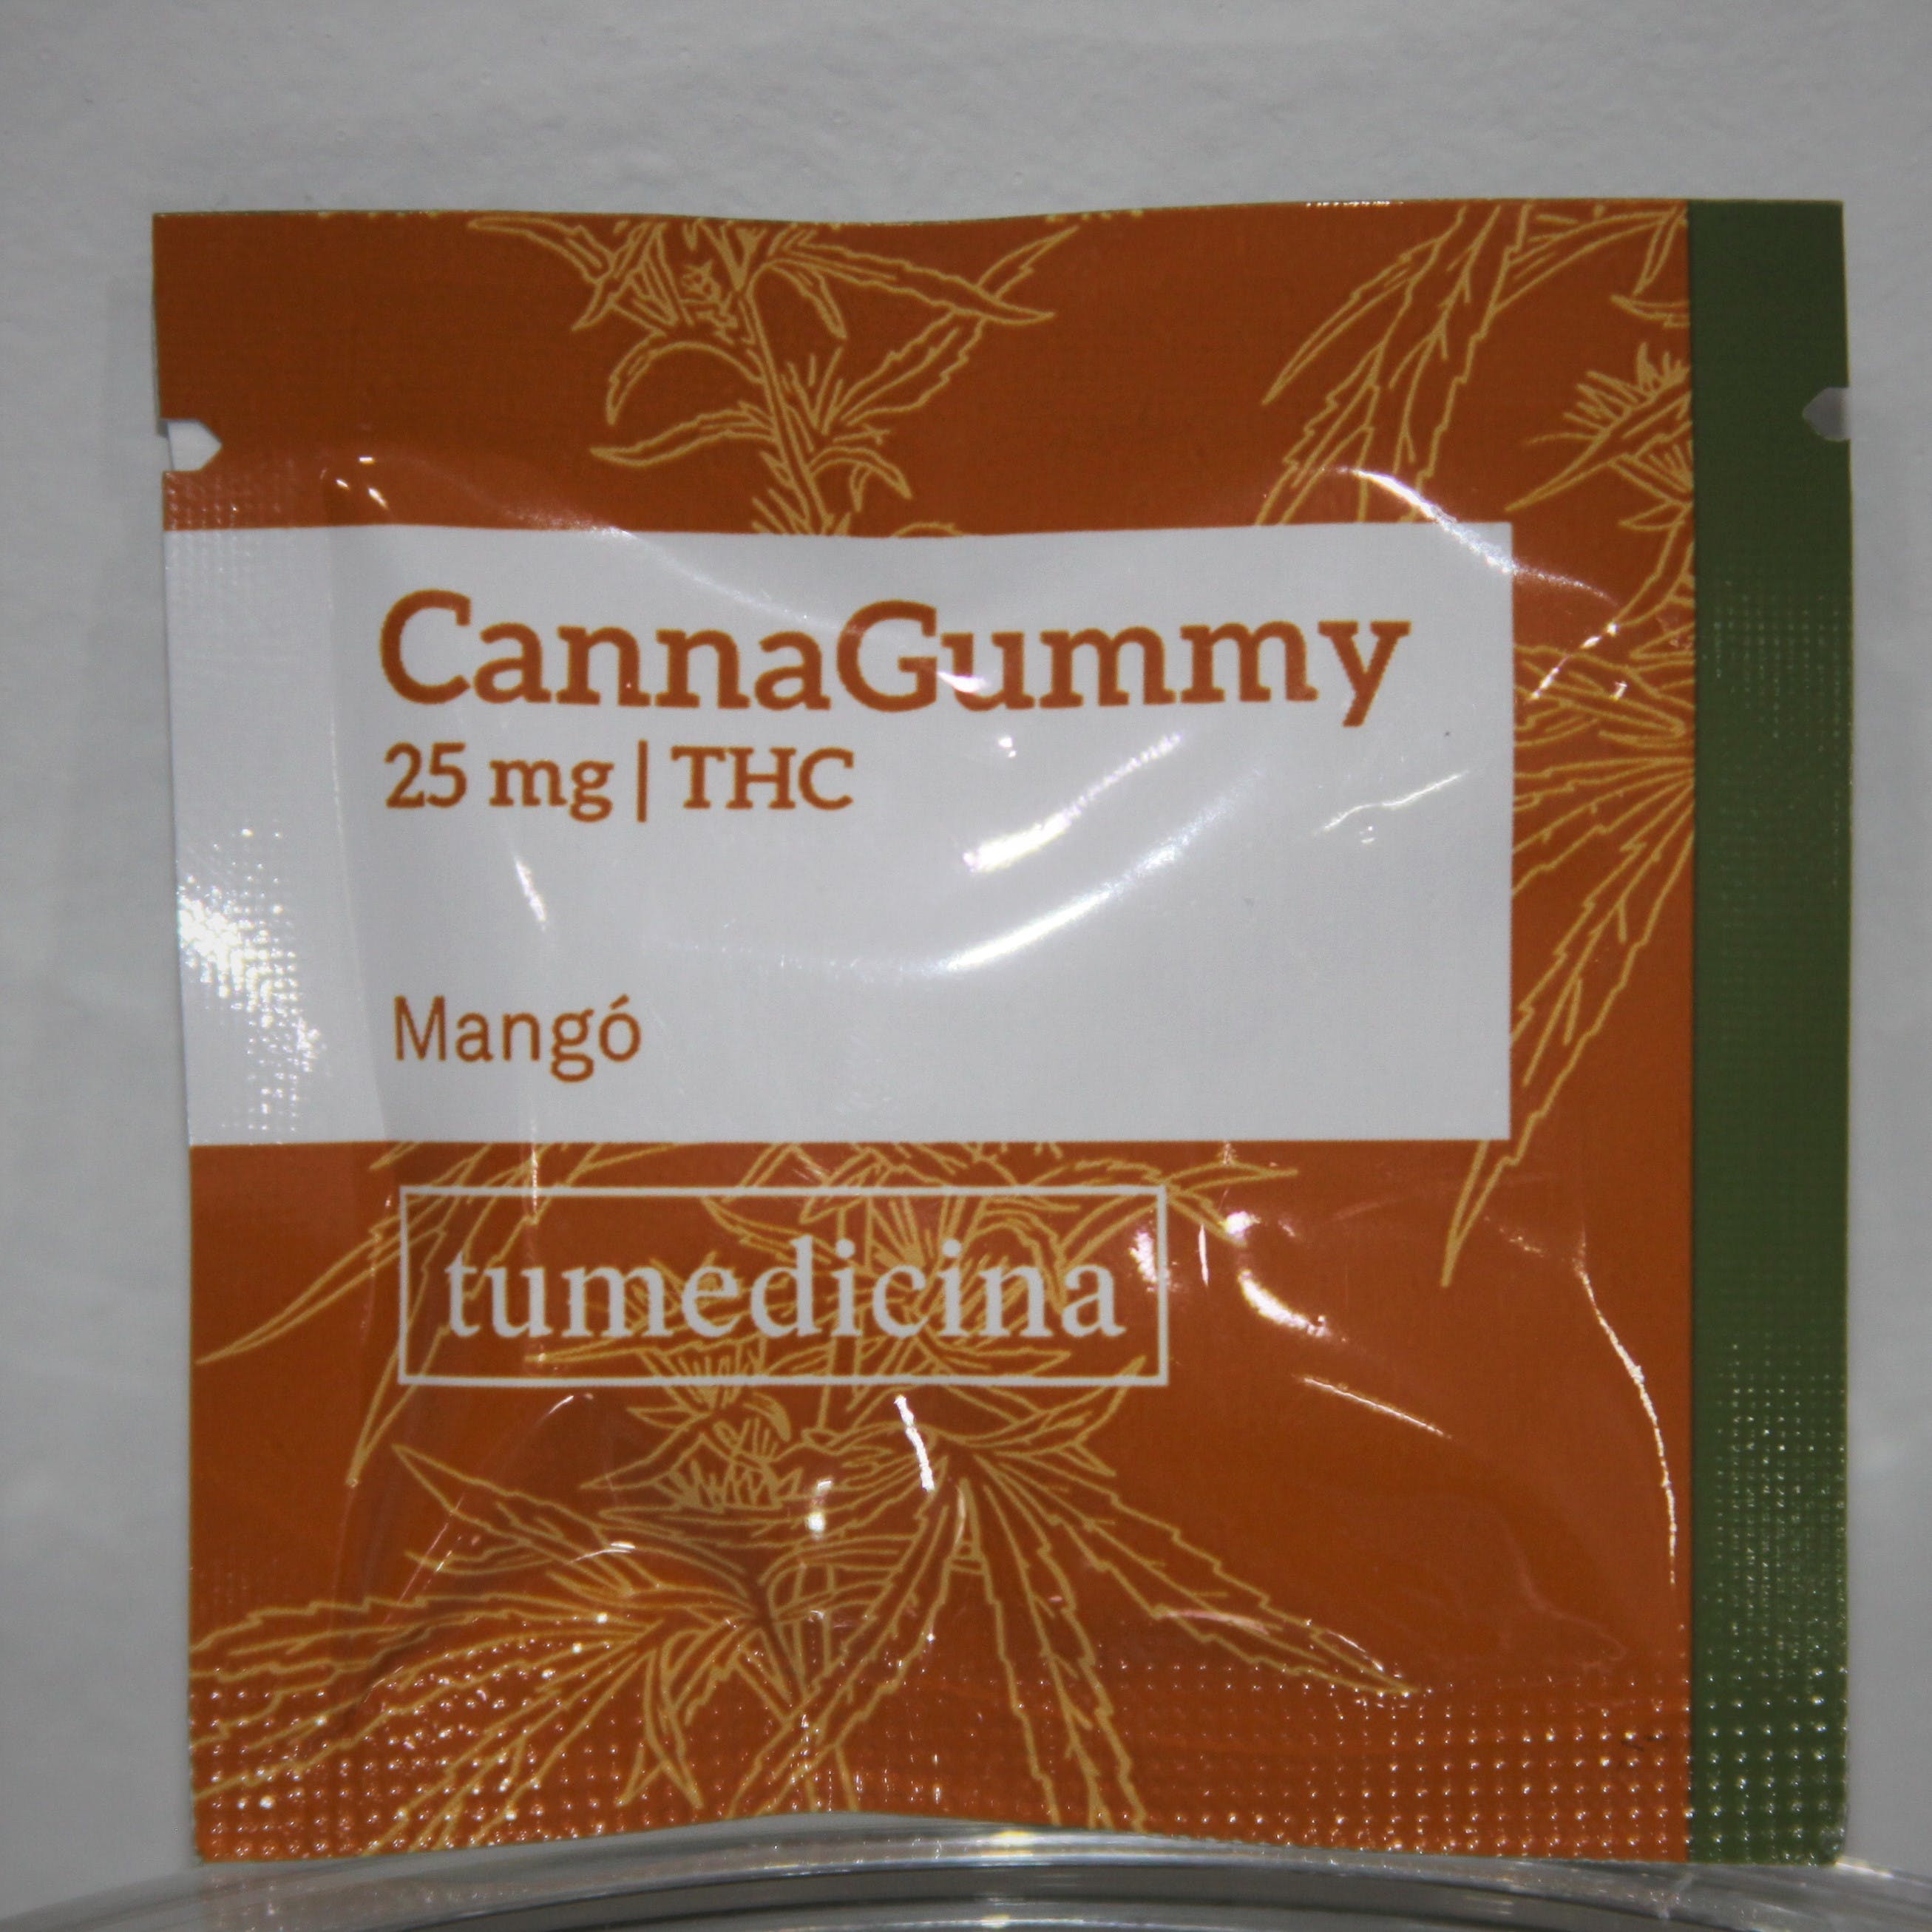 edible-cannagummy-manga-26sup3-3b